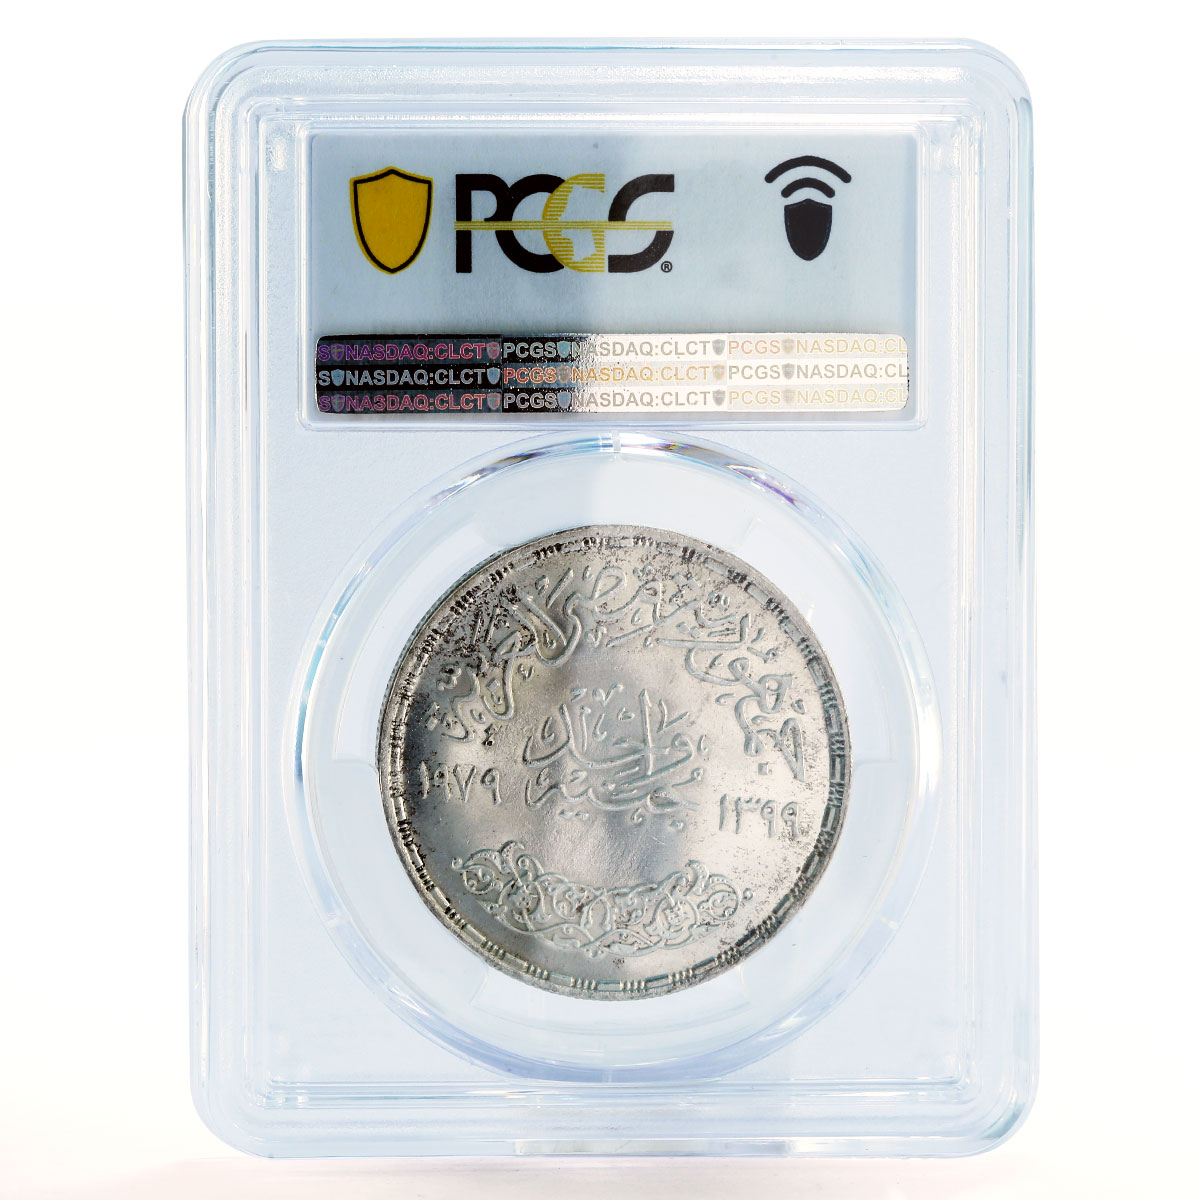 Egypt 1 pound Corrective Revolution Man Under the Sun MS65 PCGS silver coin 1979